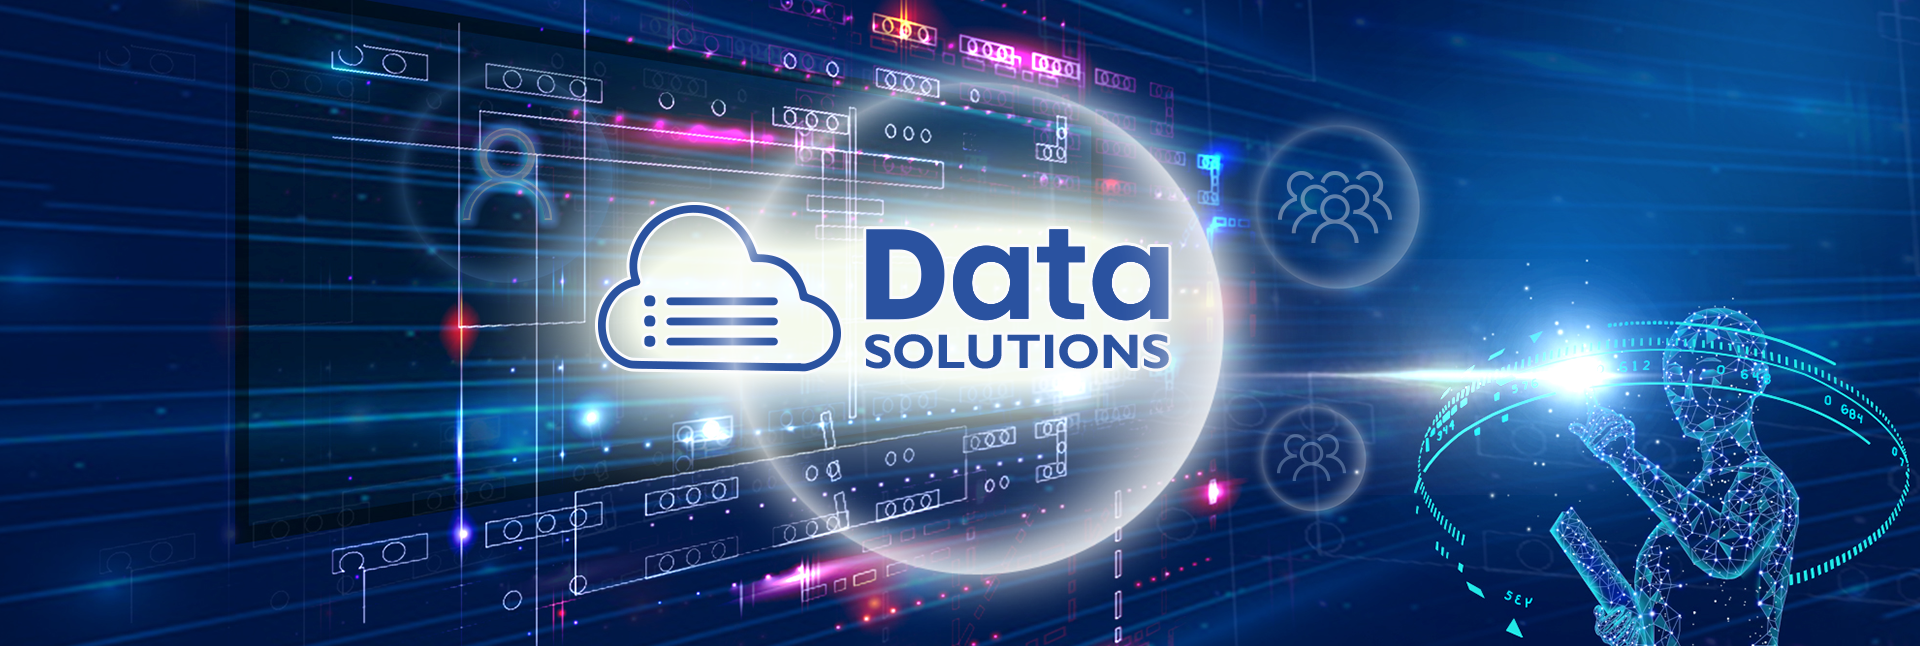 Data solutions